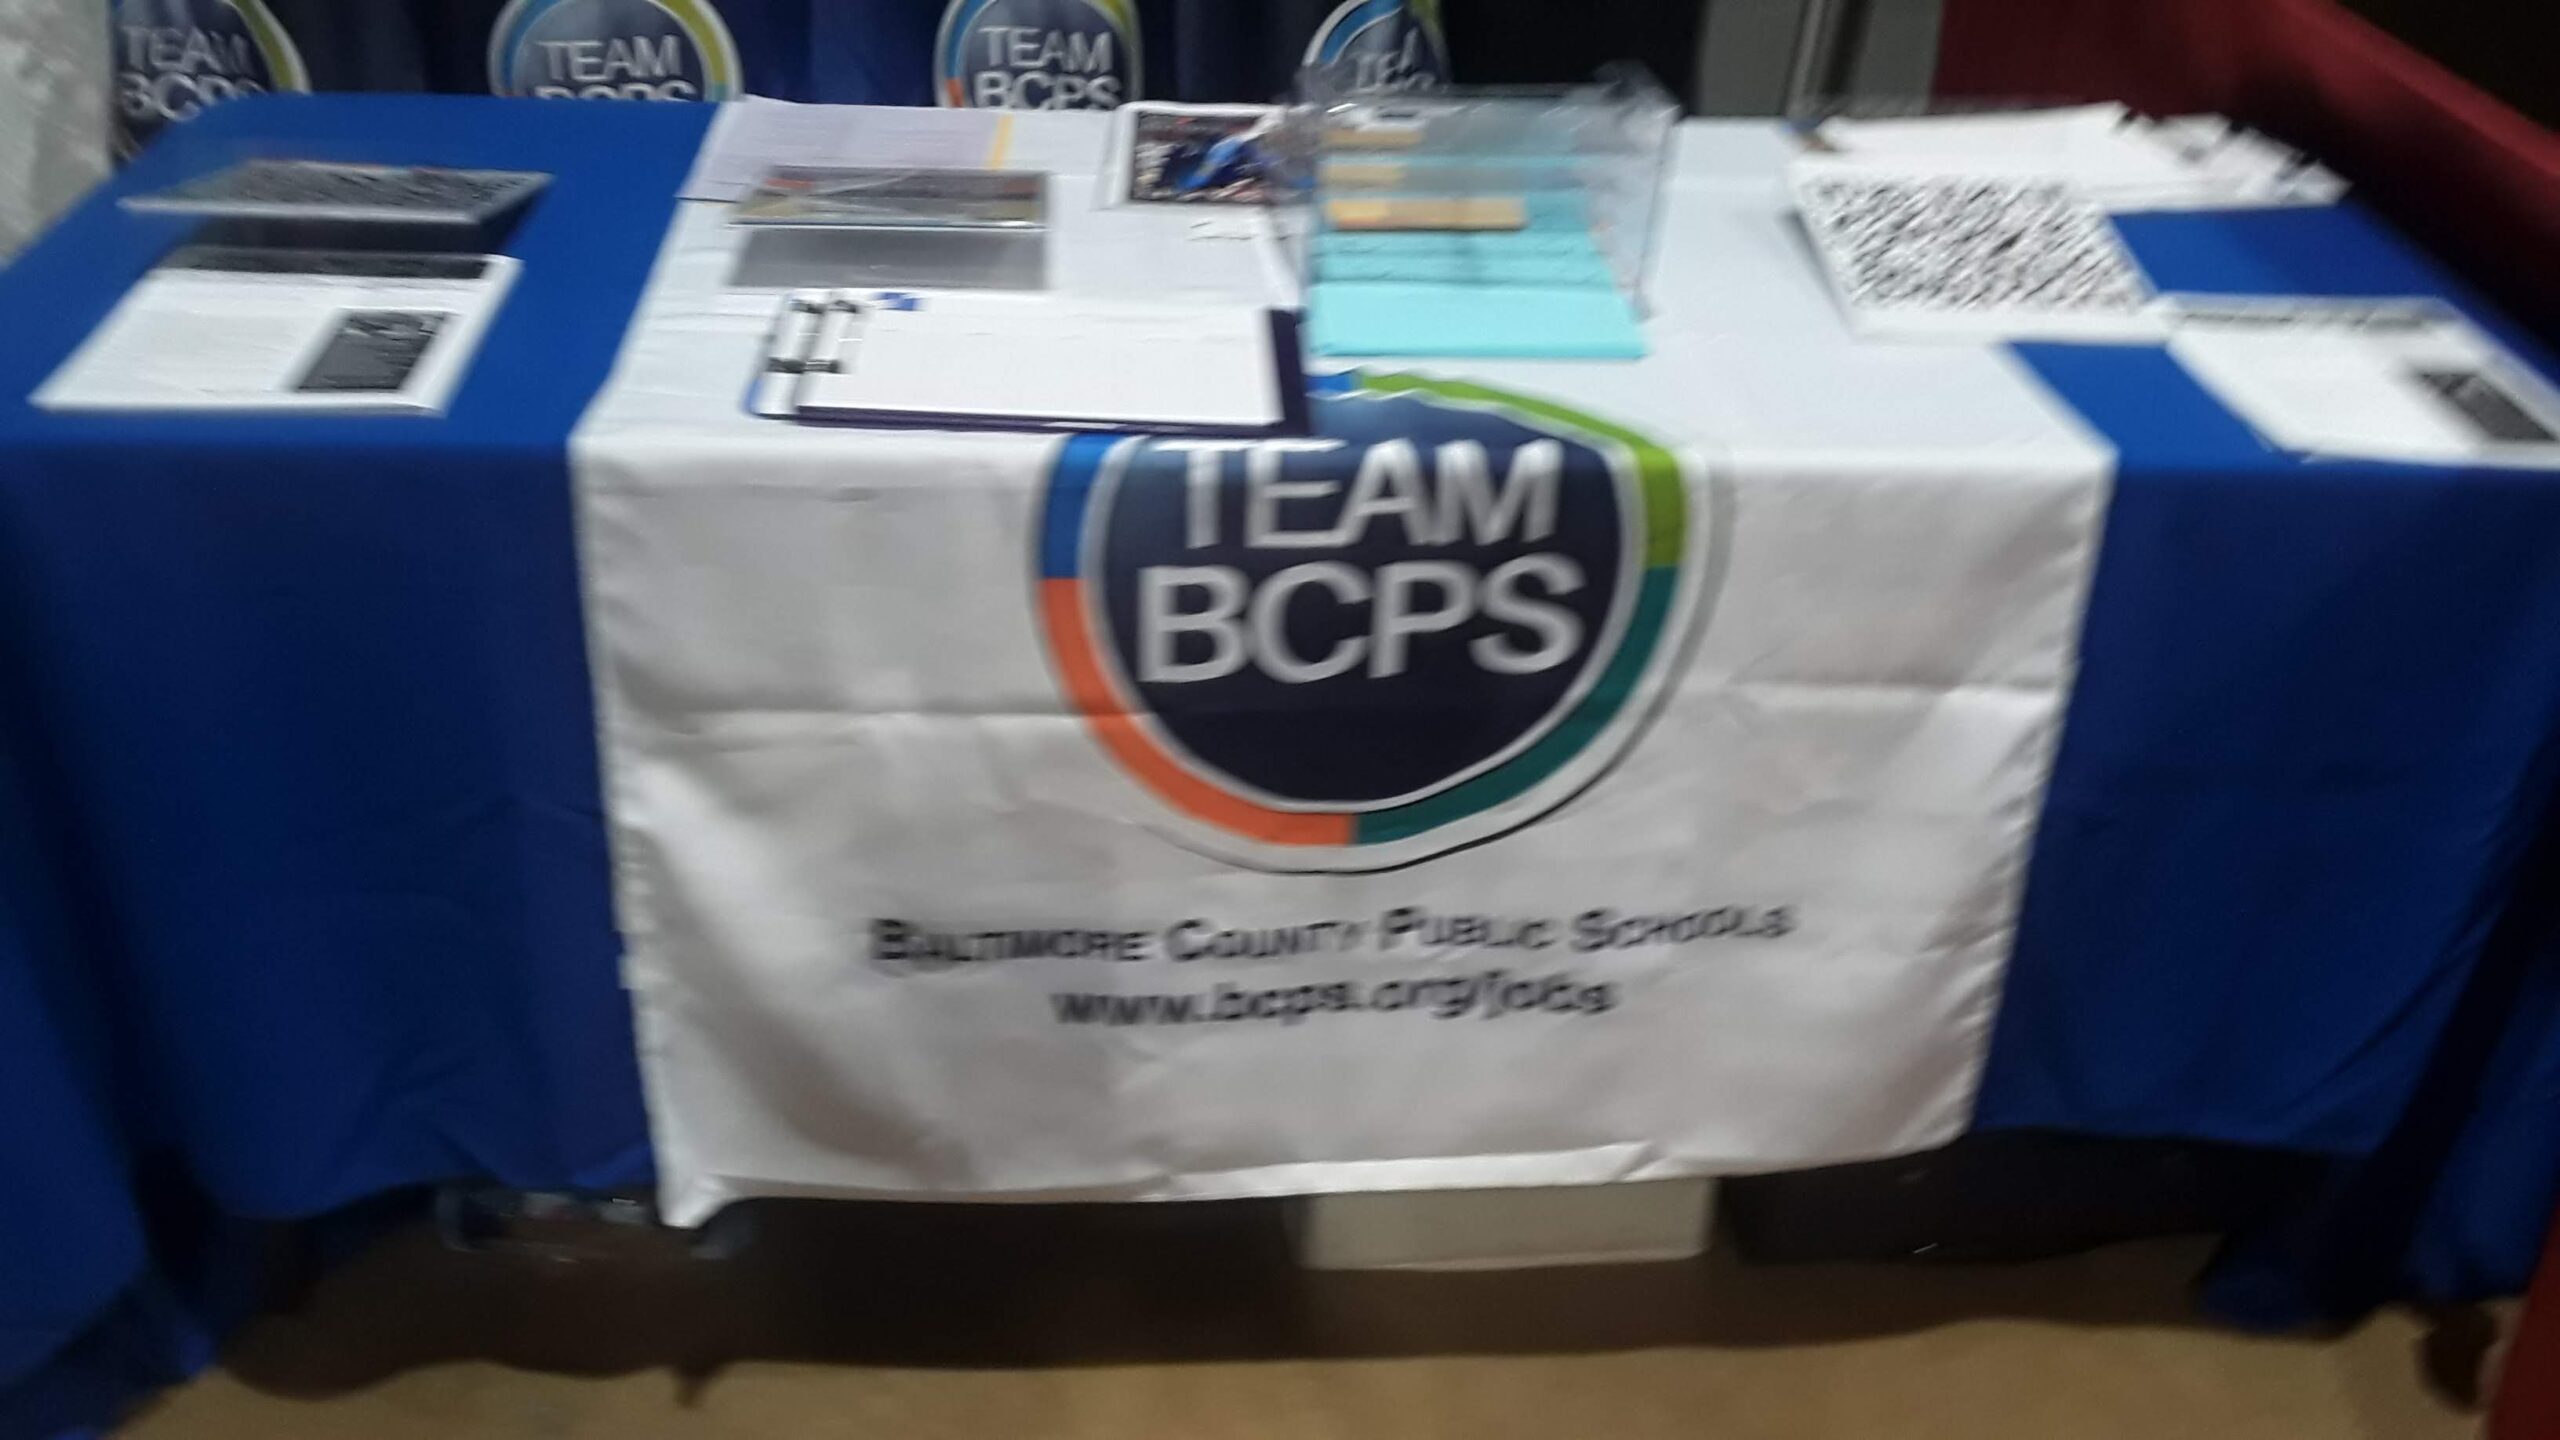 BCPS to Host March Job Fair